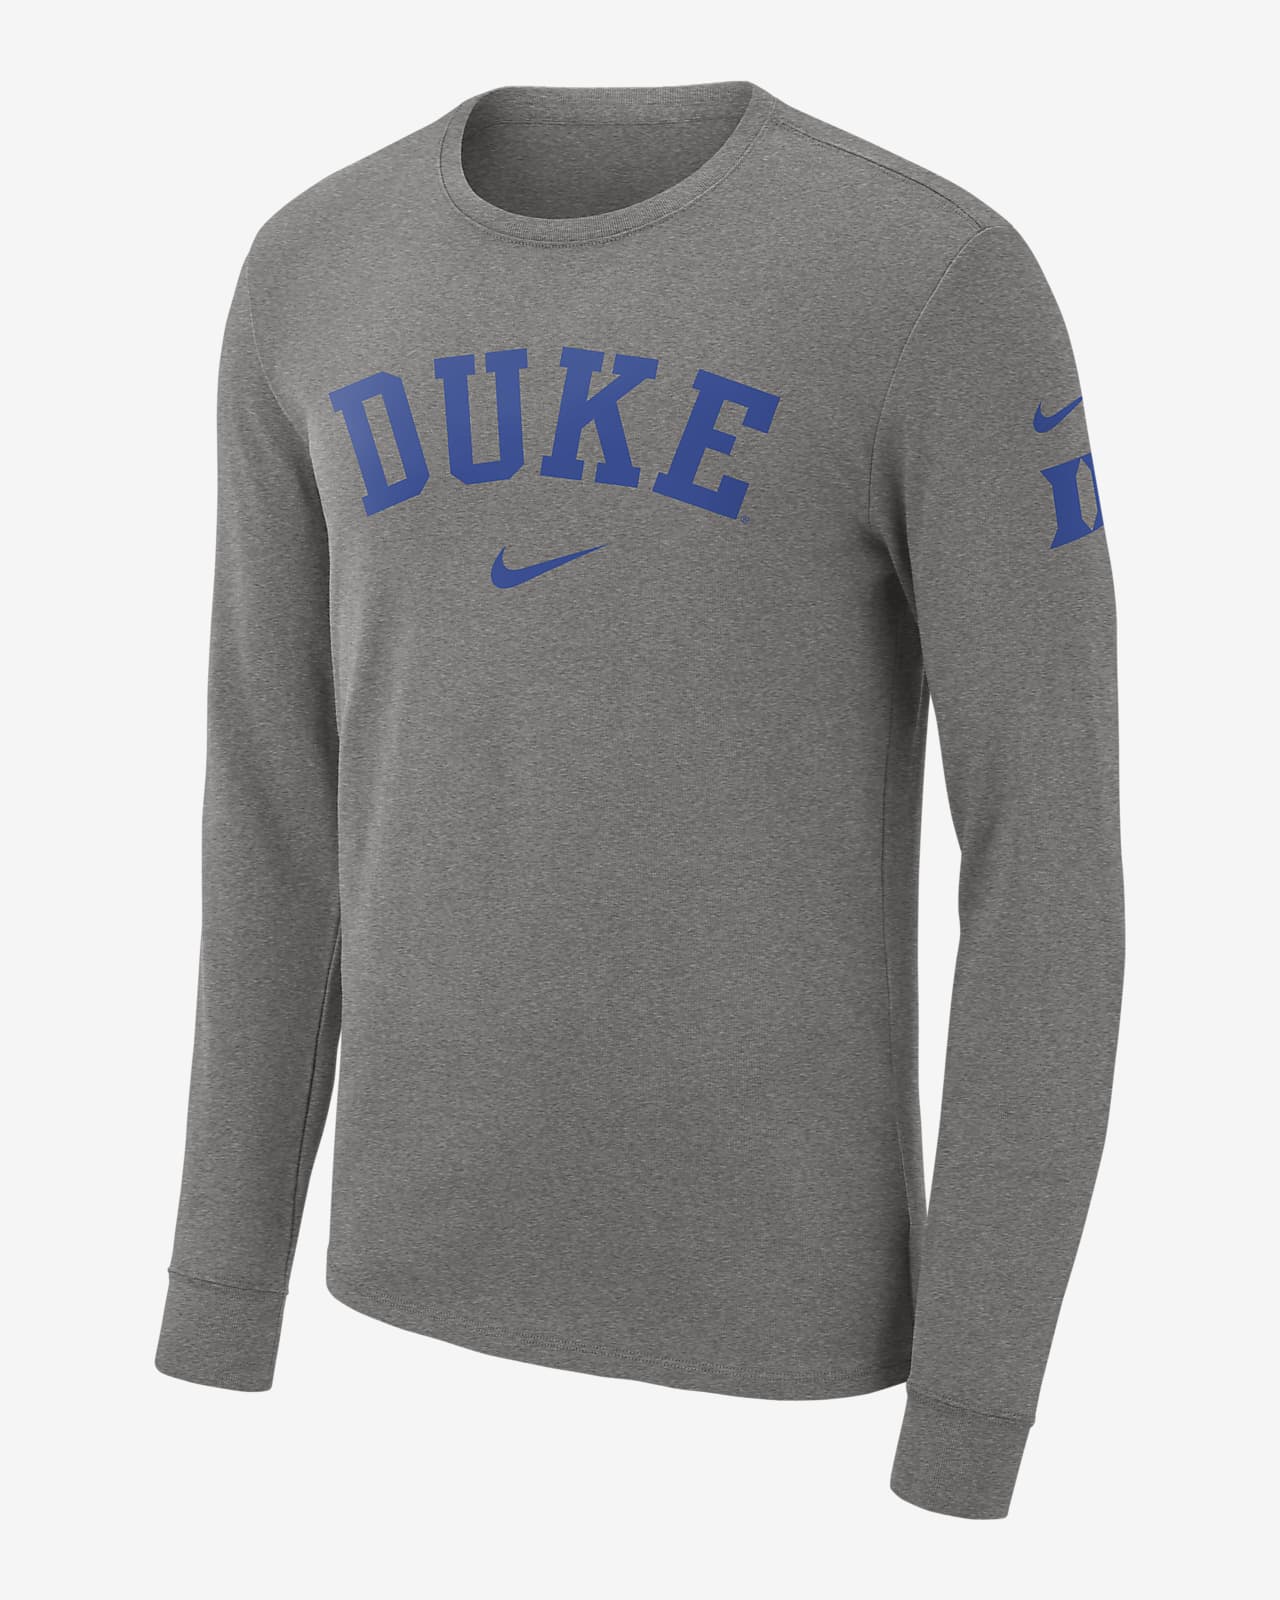 Nike College (Duke) Men's Long-Sleeve Nike.com